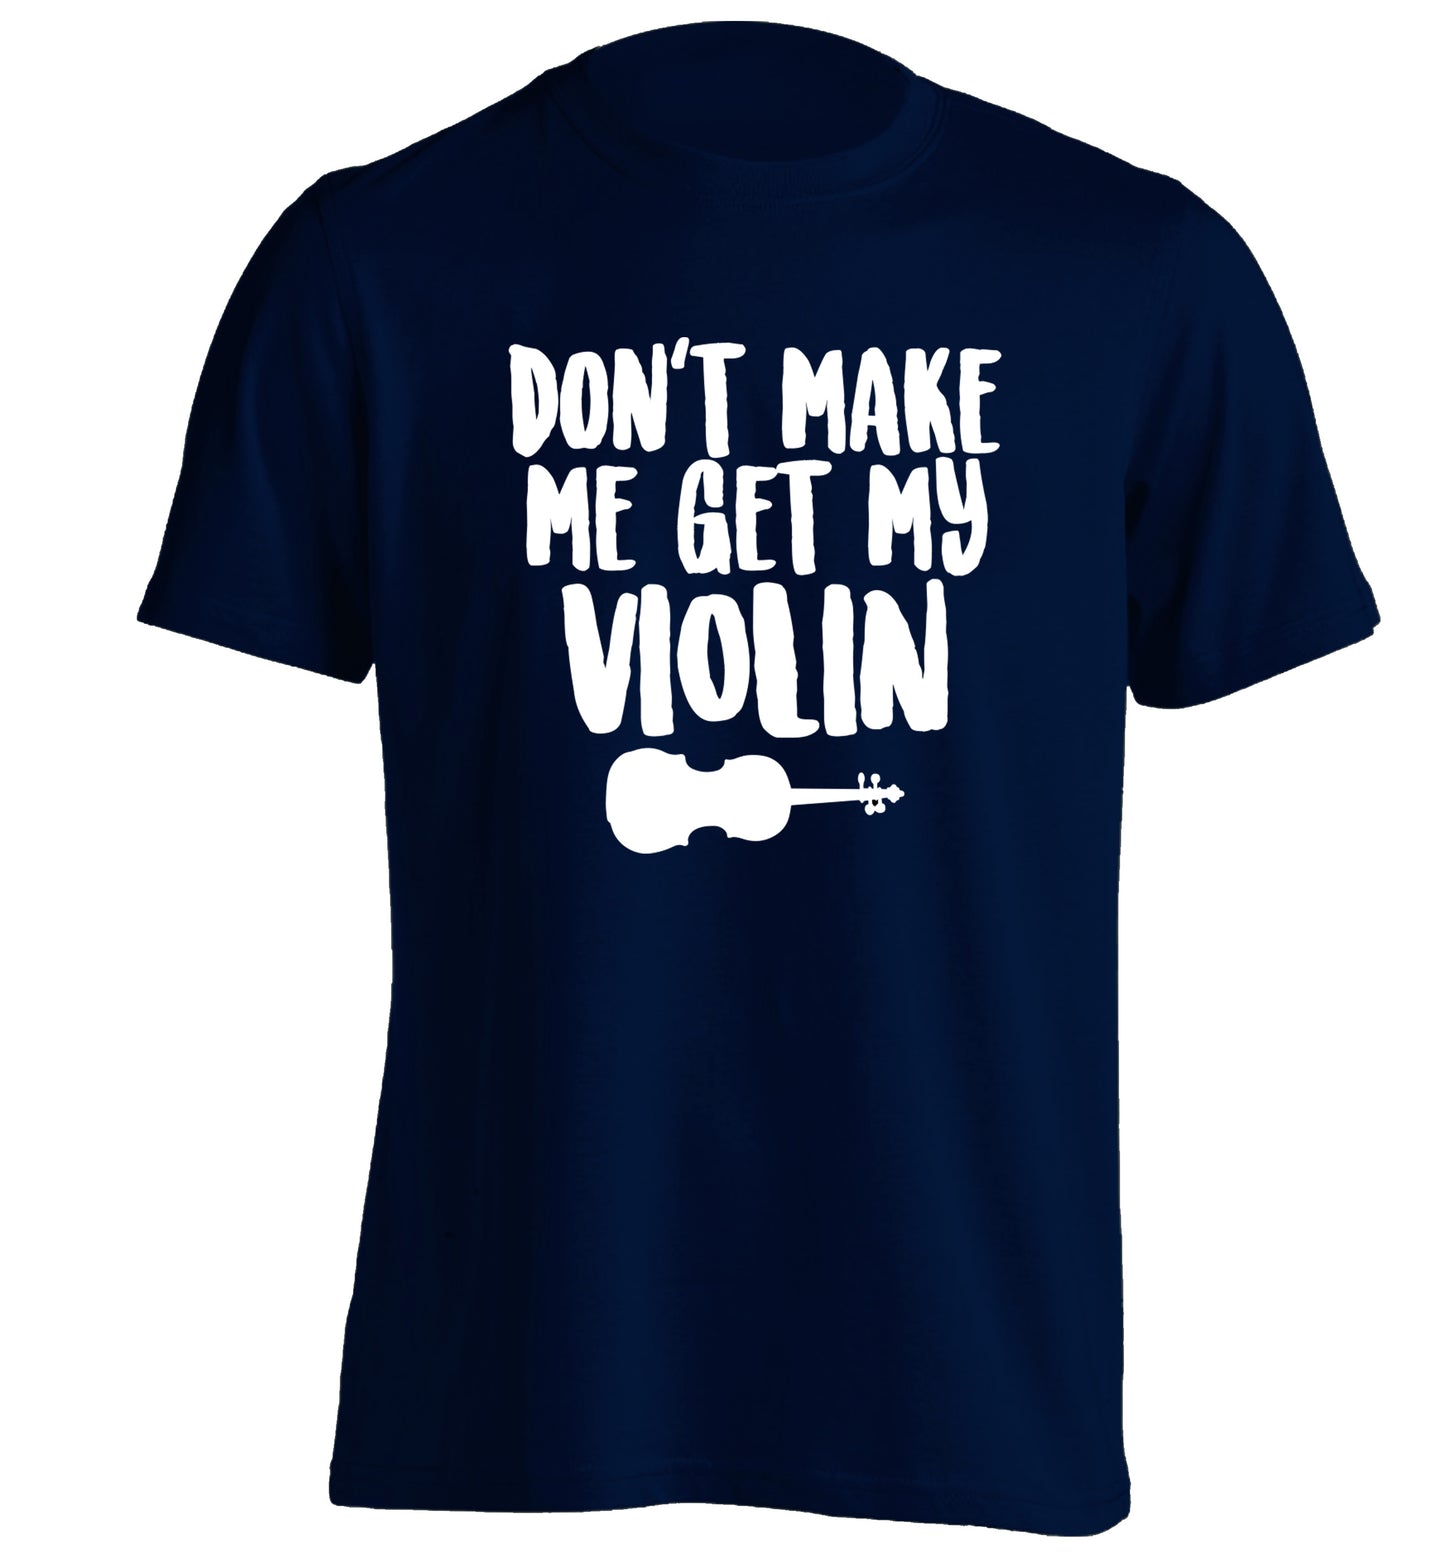 Don't make me get my violin adults unisex navy Tshirt 2XL